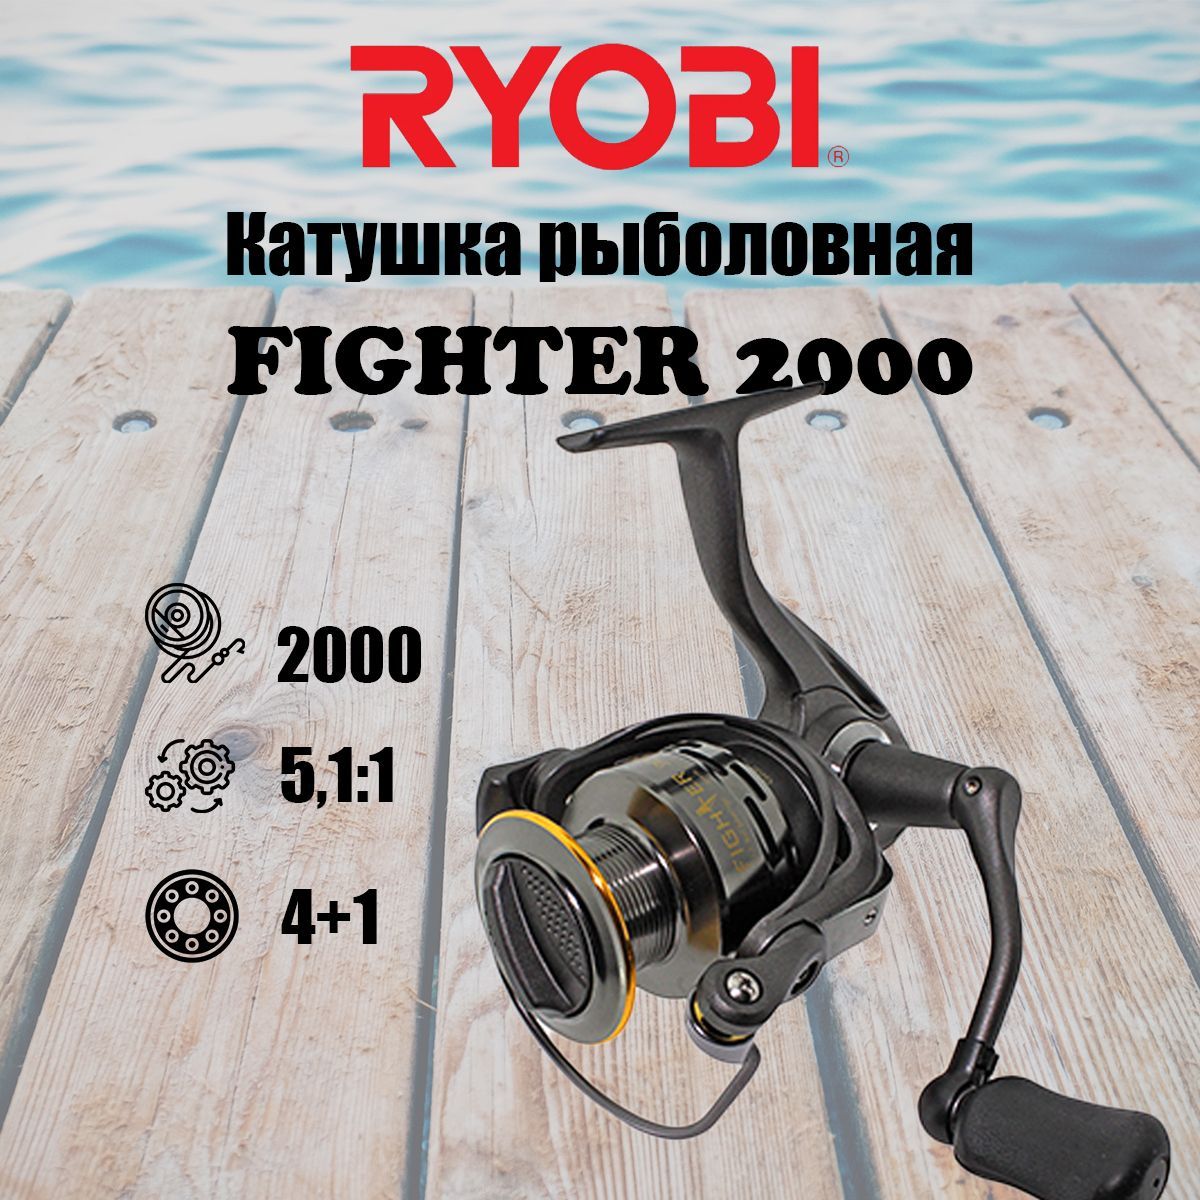 Катушка для рыбалки RYOBI FIGHTER aqua129168